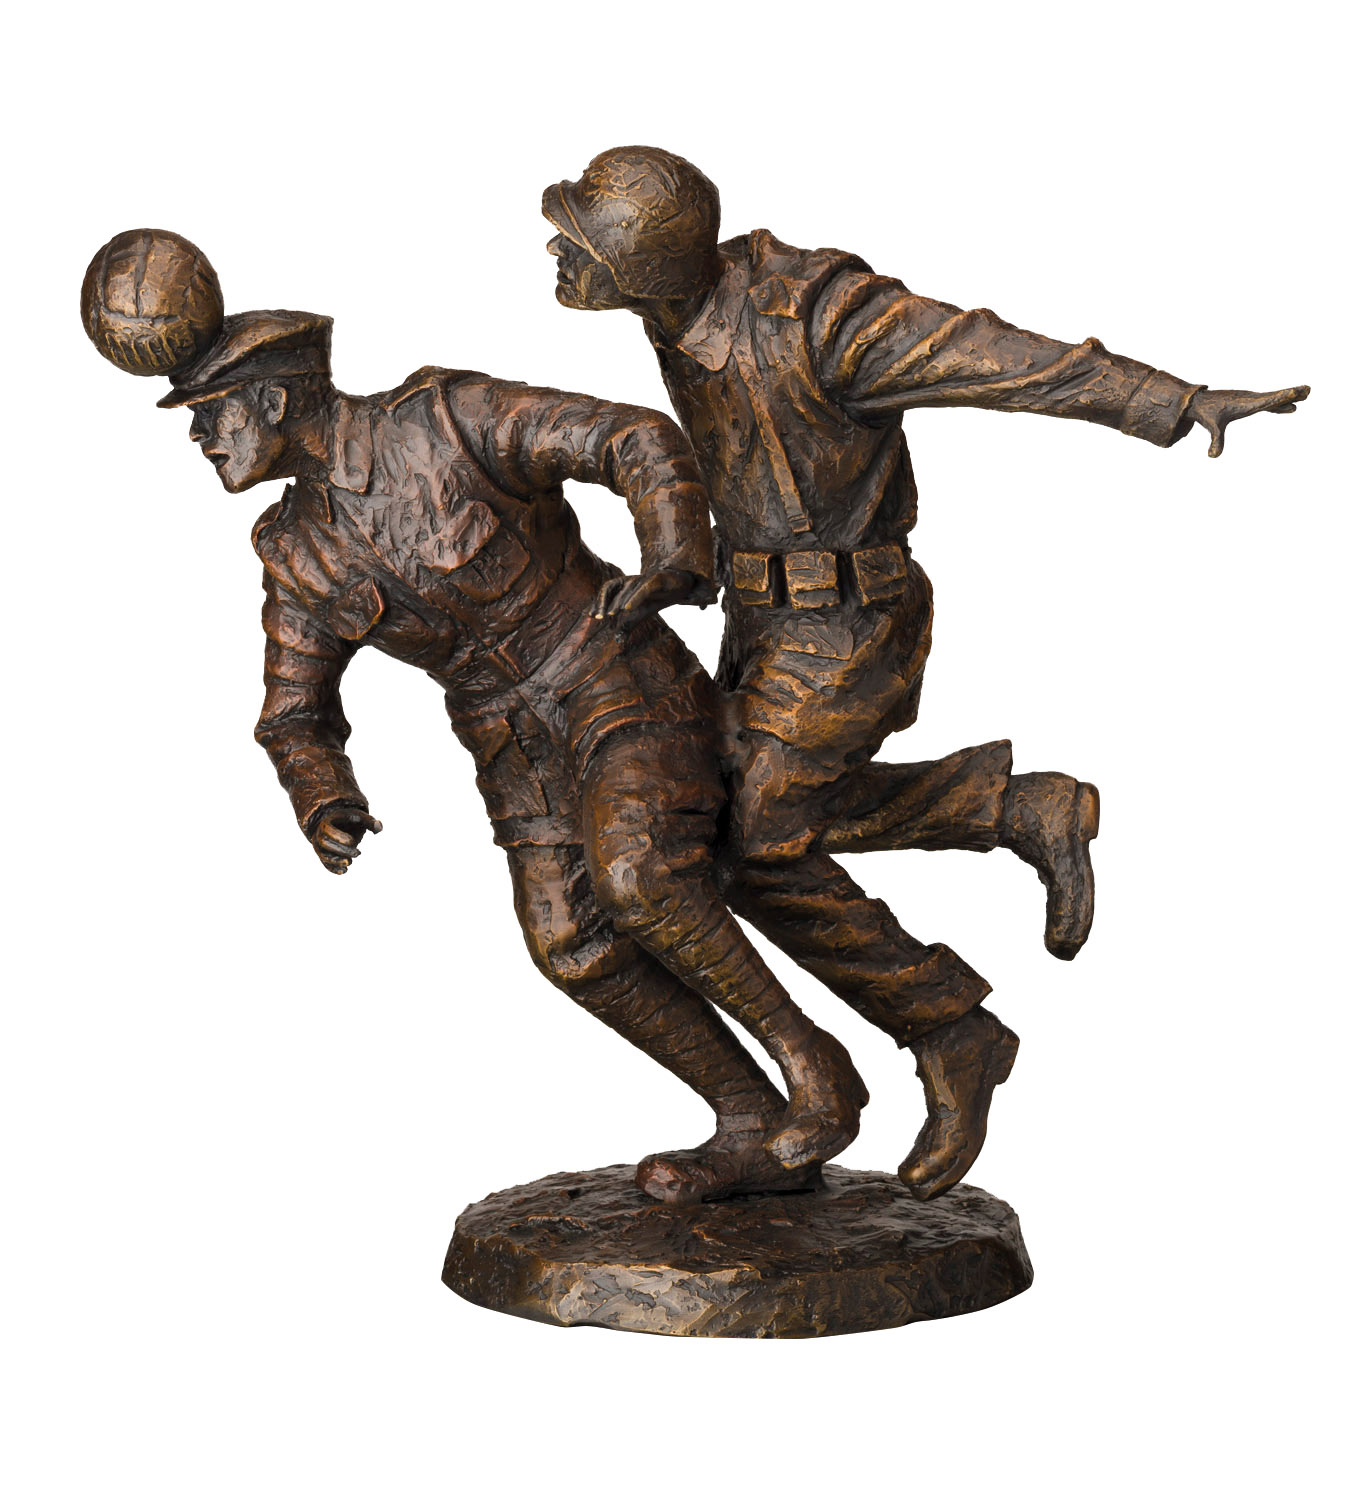 On Me 'Ed, Kamerad! by Bob Barker, Sculpture | war | Football | Nostalgic | Figurative